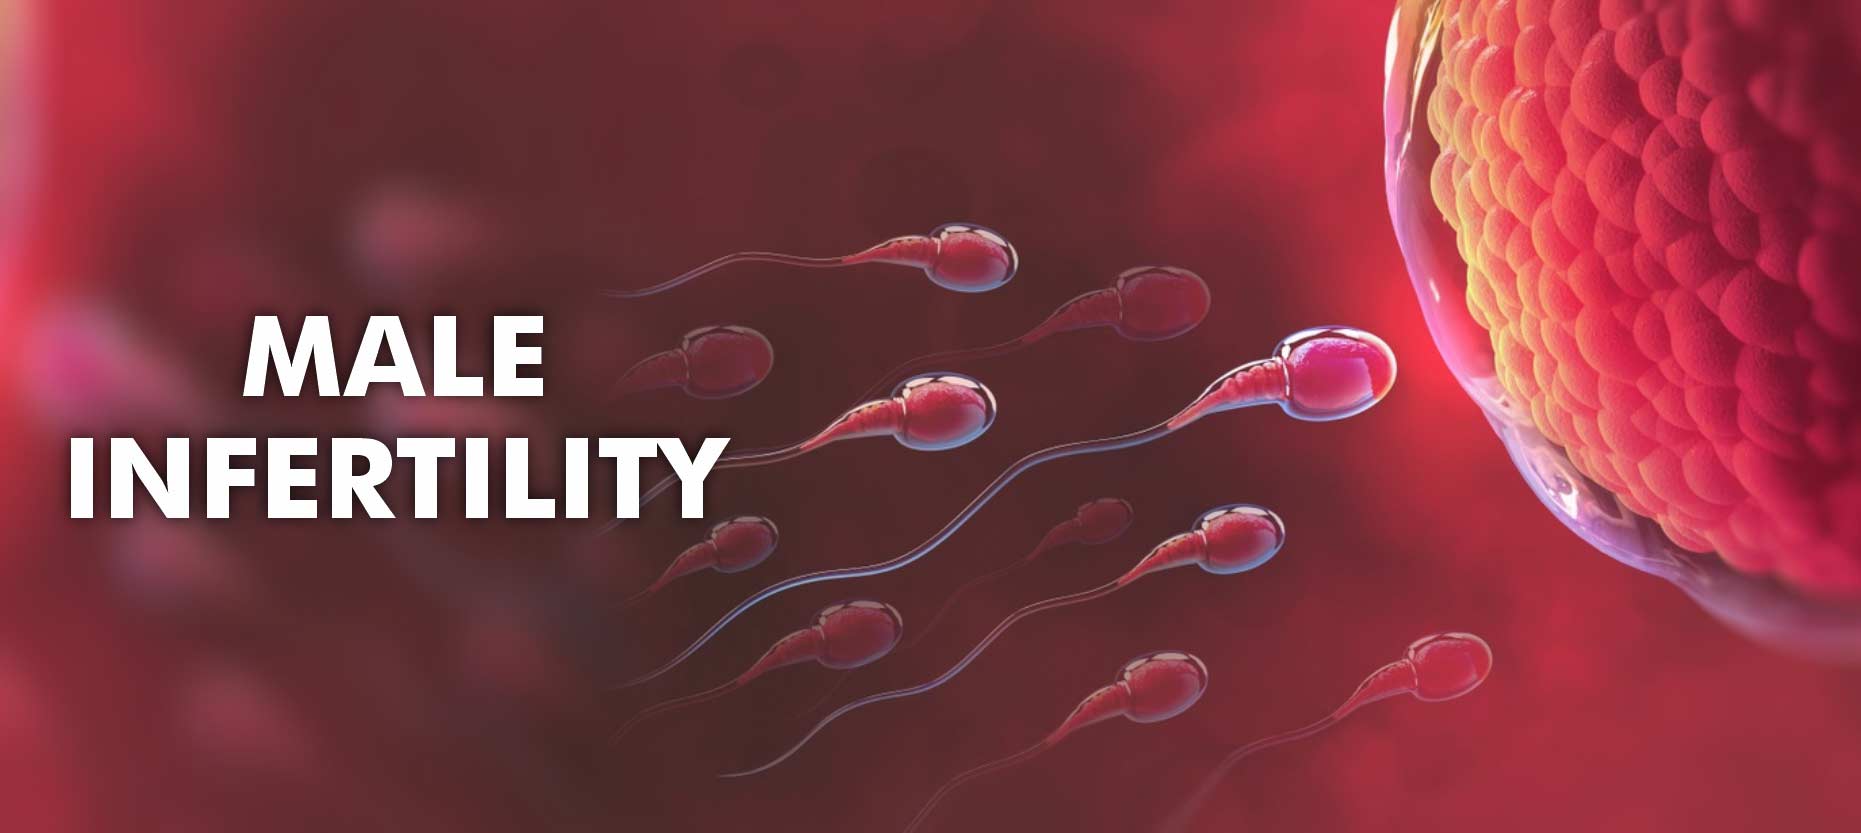 Male Infertility: Symptoms, Causes, Treatment